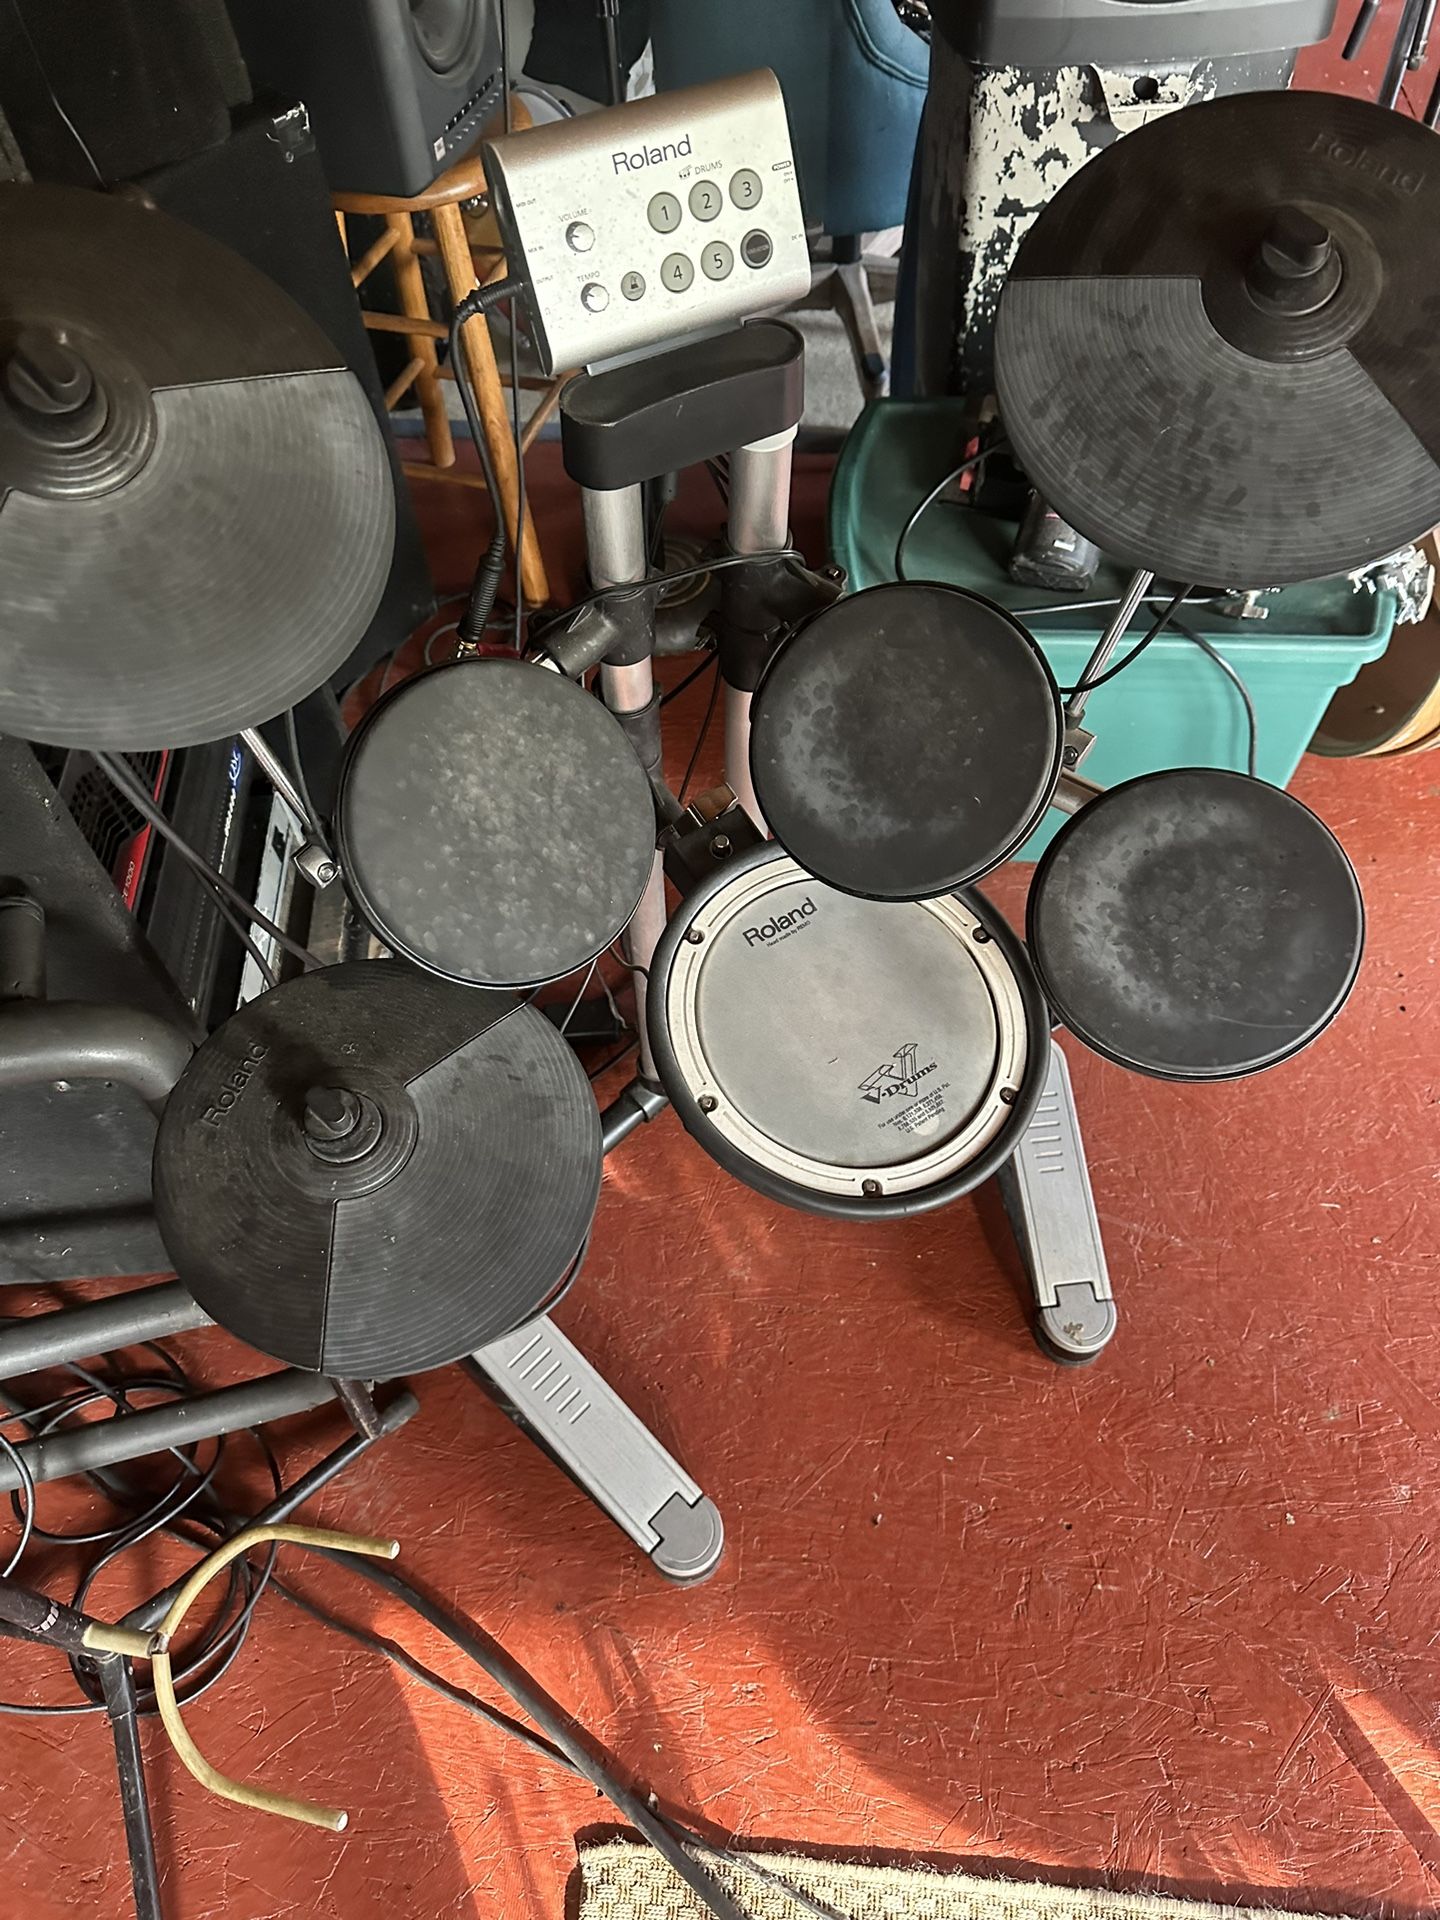 Rolland Electric Drum Set! 